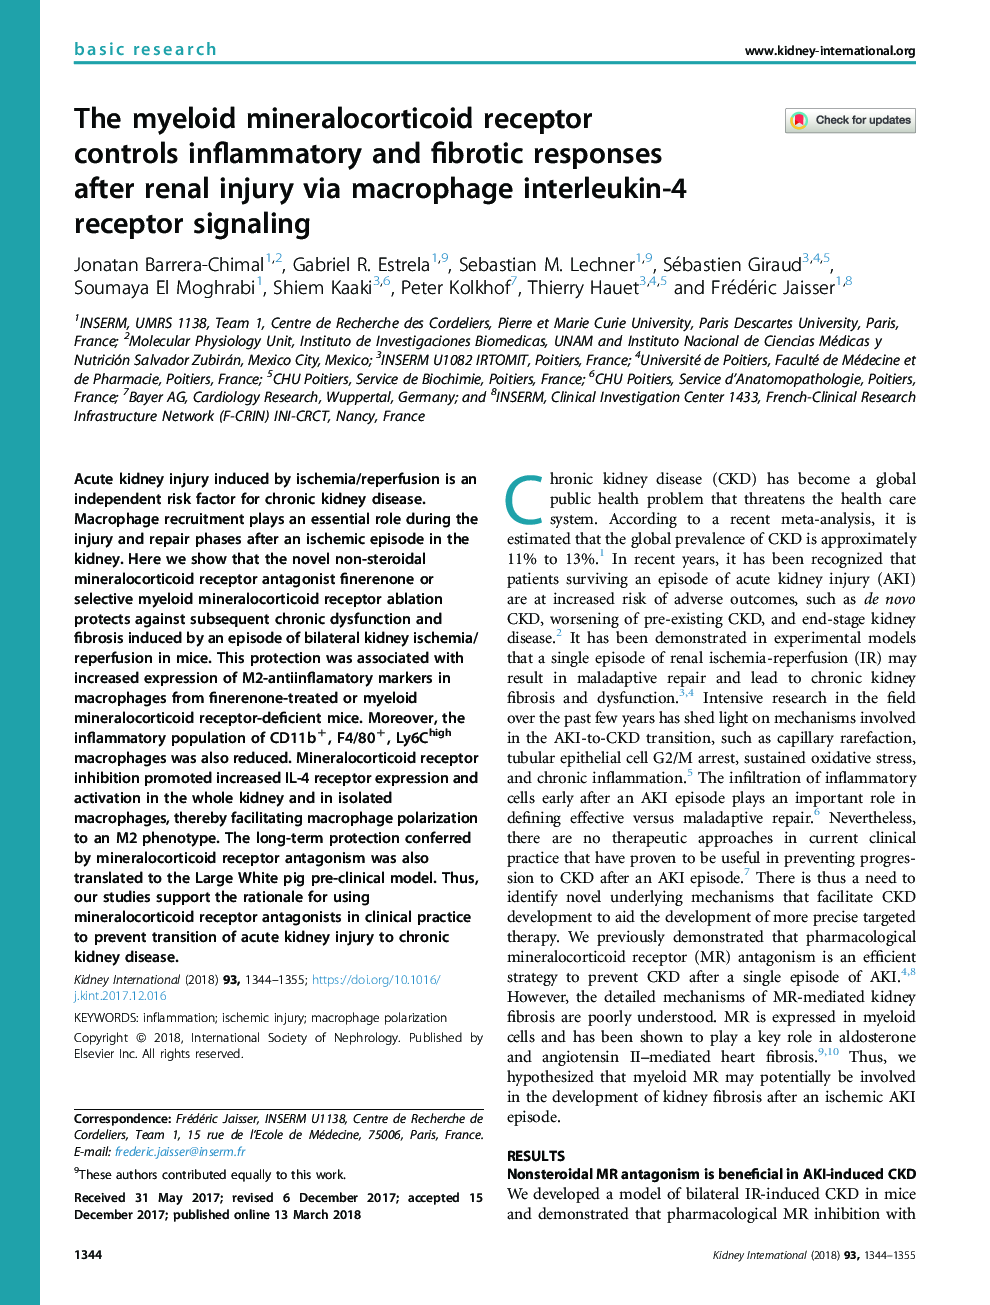 The myeloid mineralocorticoid receptor controlsÂ inflammatory and fibrotic responses afterÂ renal injury via macrophage interleukin-4 receptor signaling